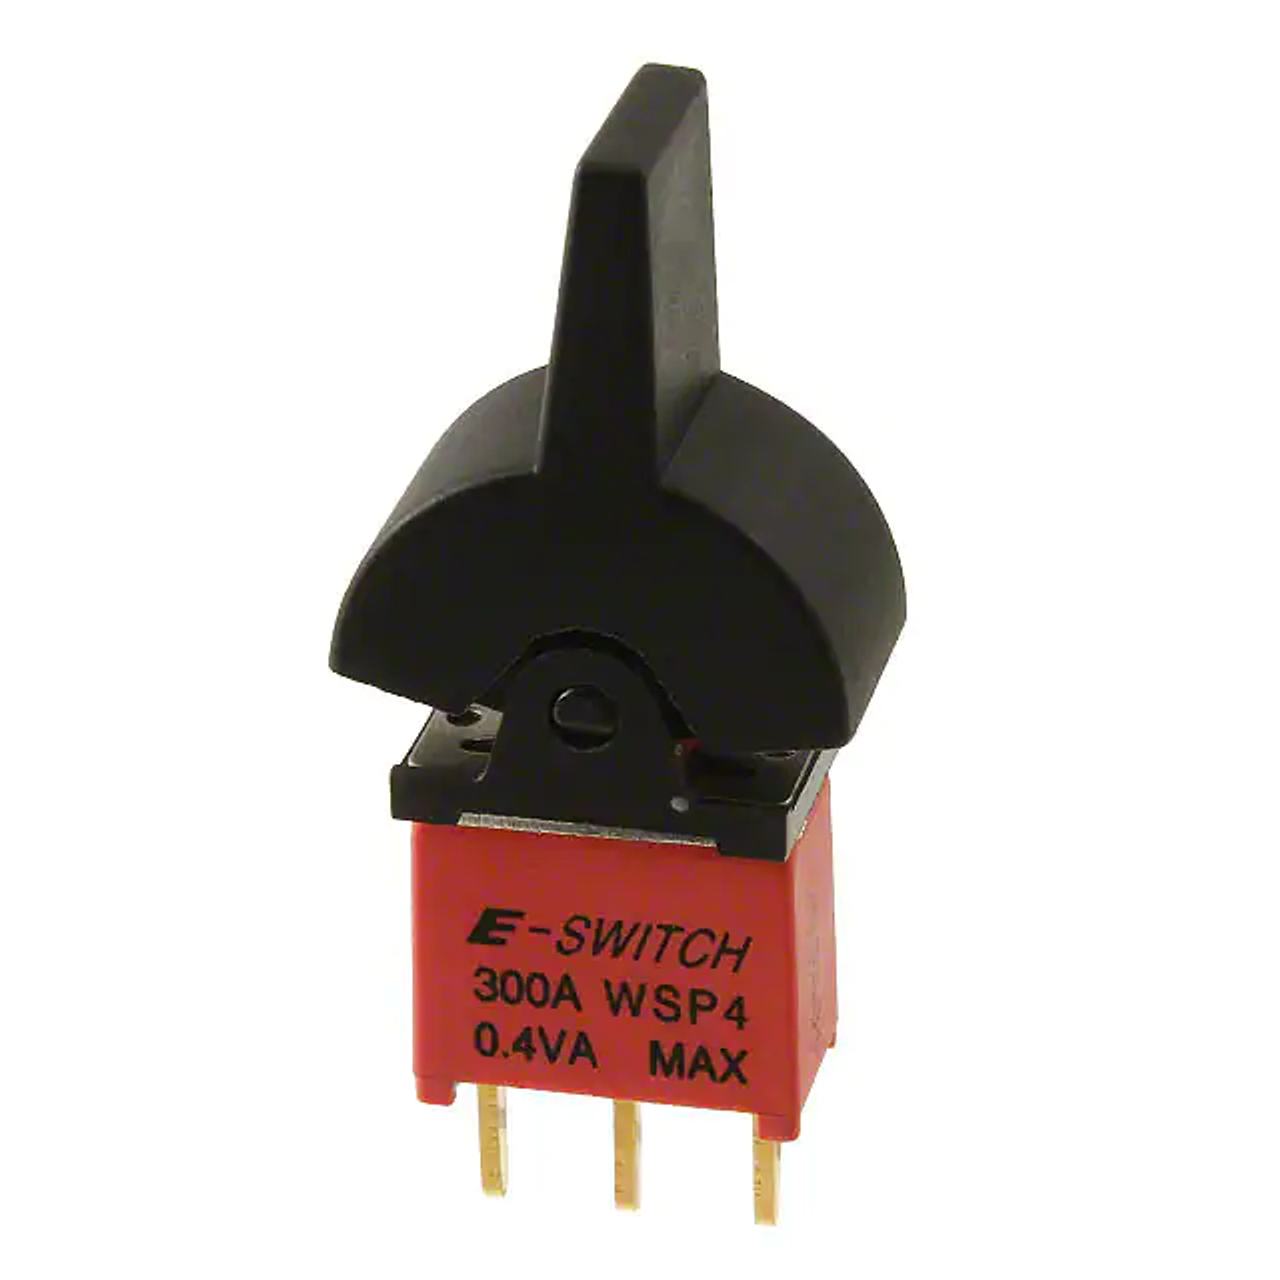 E-Switch 300AWSP4J2BLKM2RE Rocker Switches